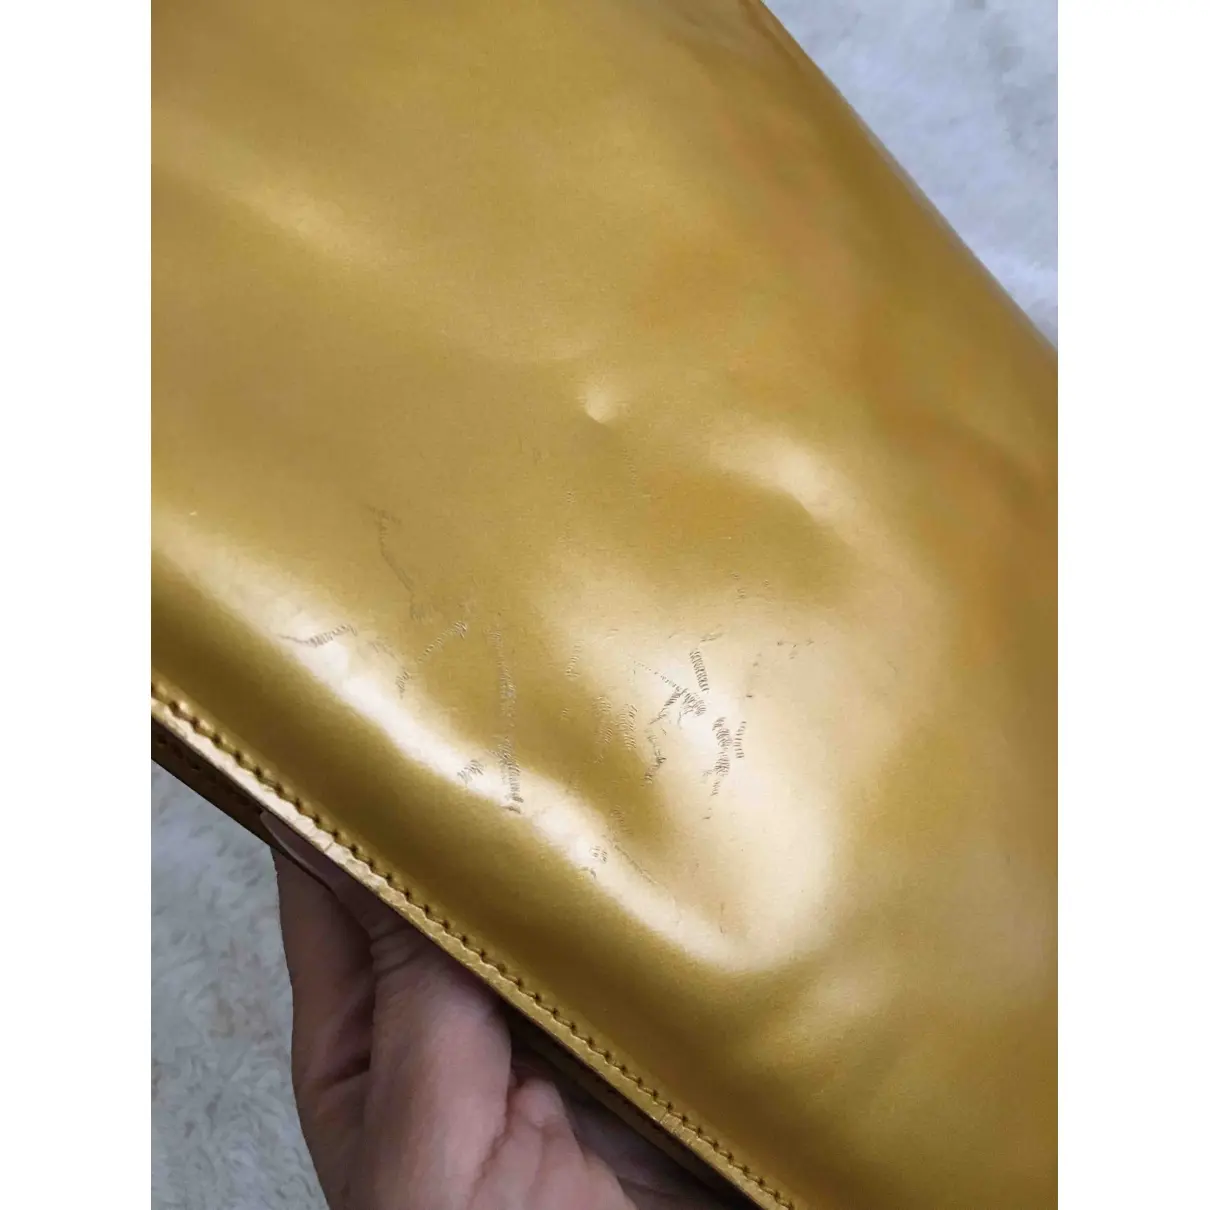 Leather clutch bag Yves Saint Laurent - Vintage